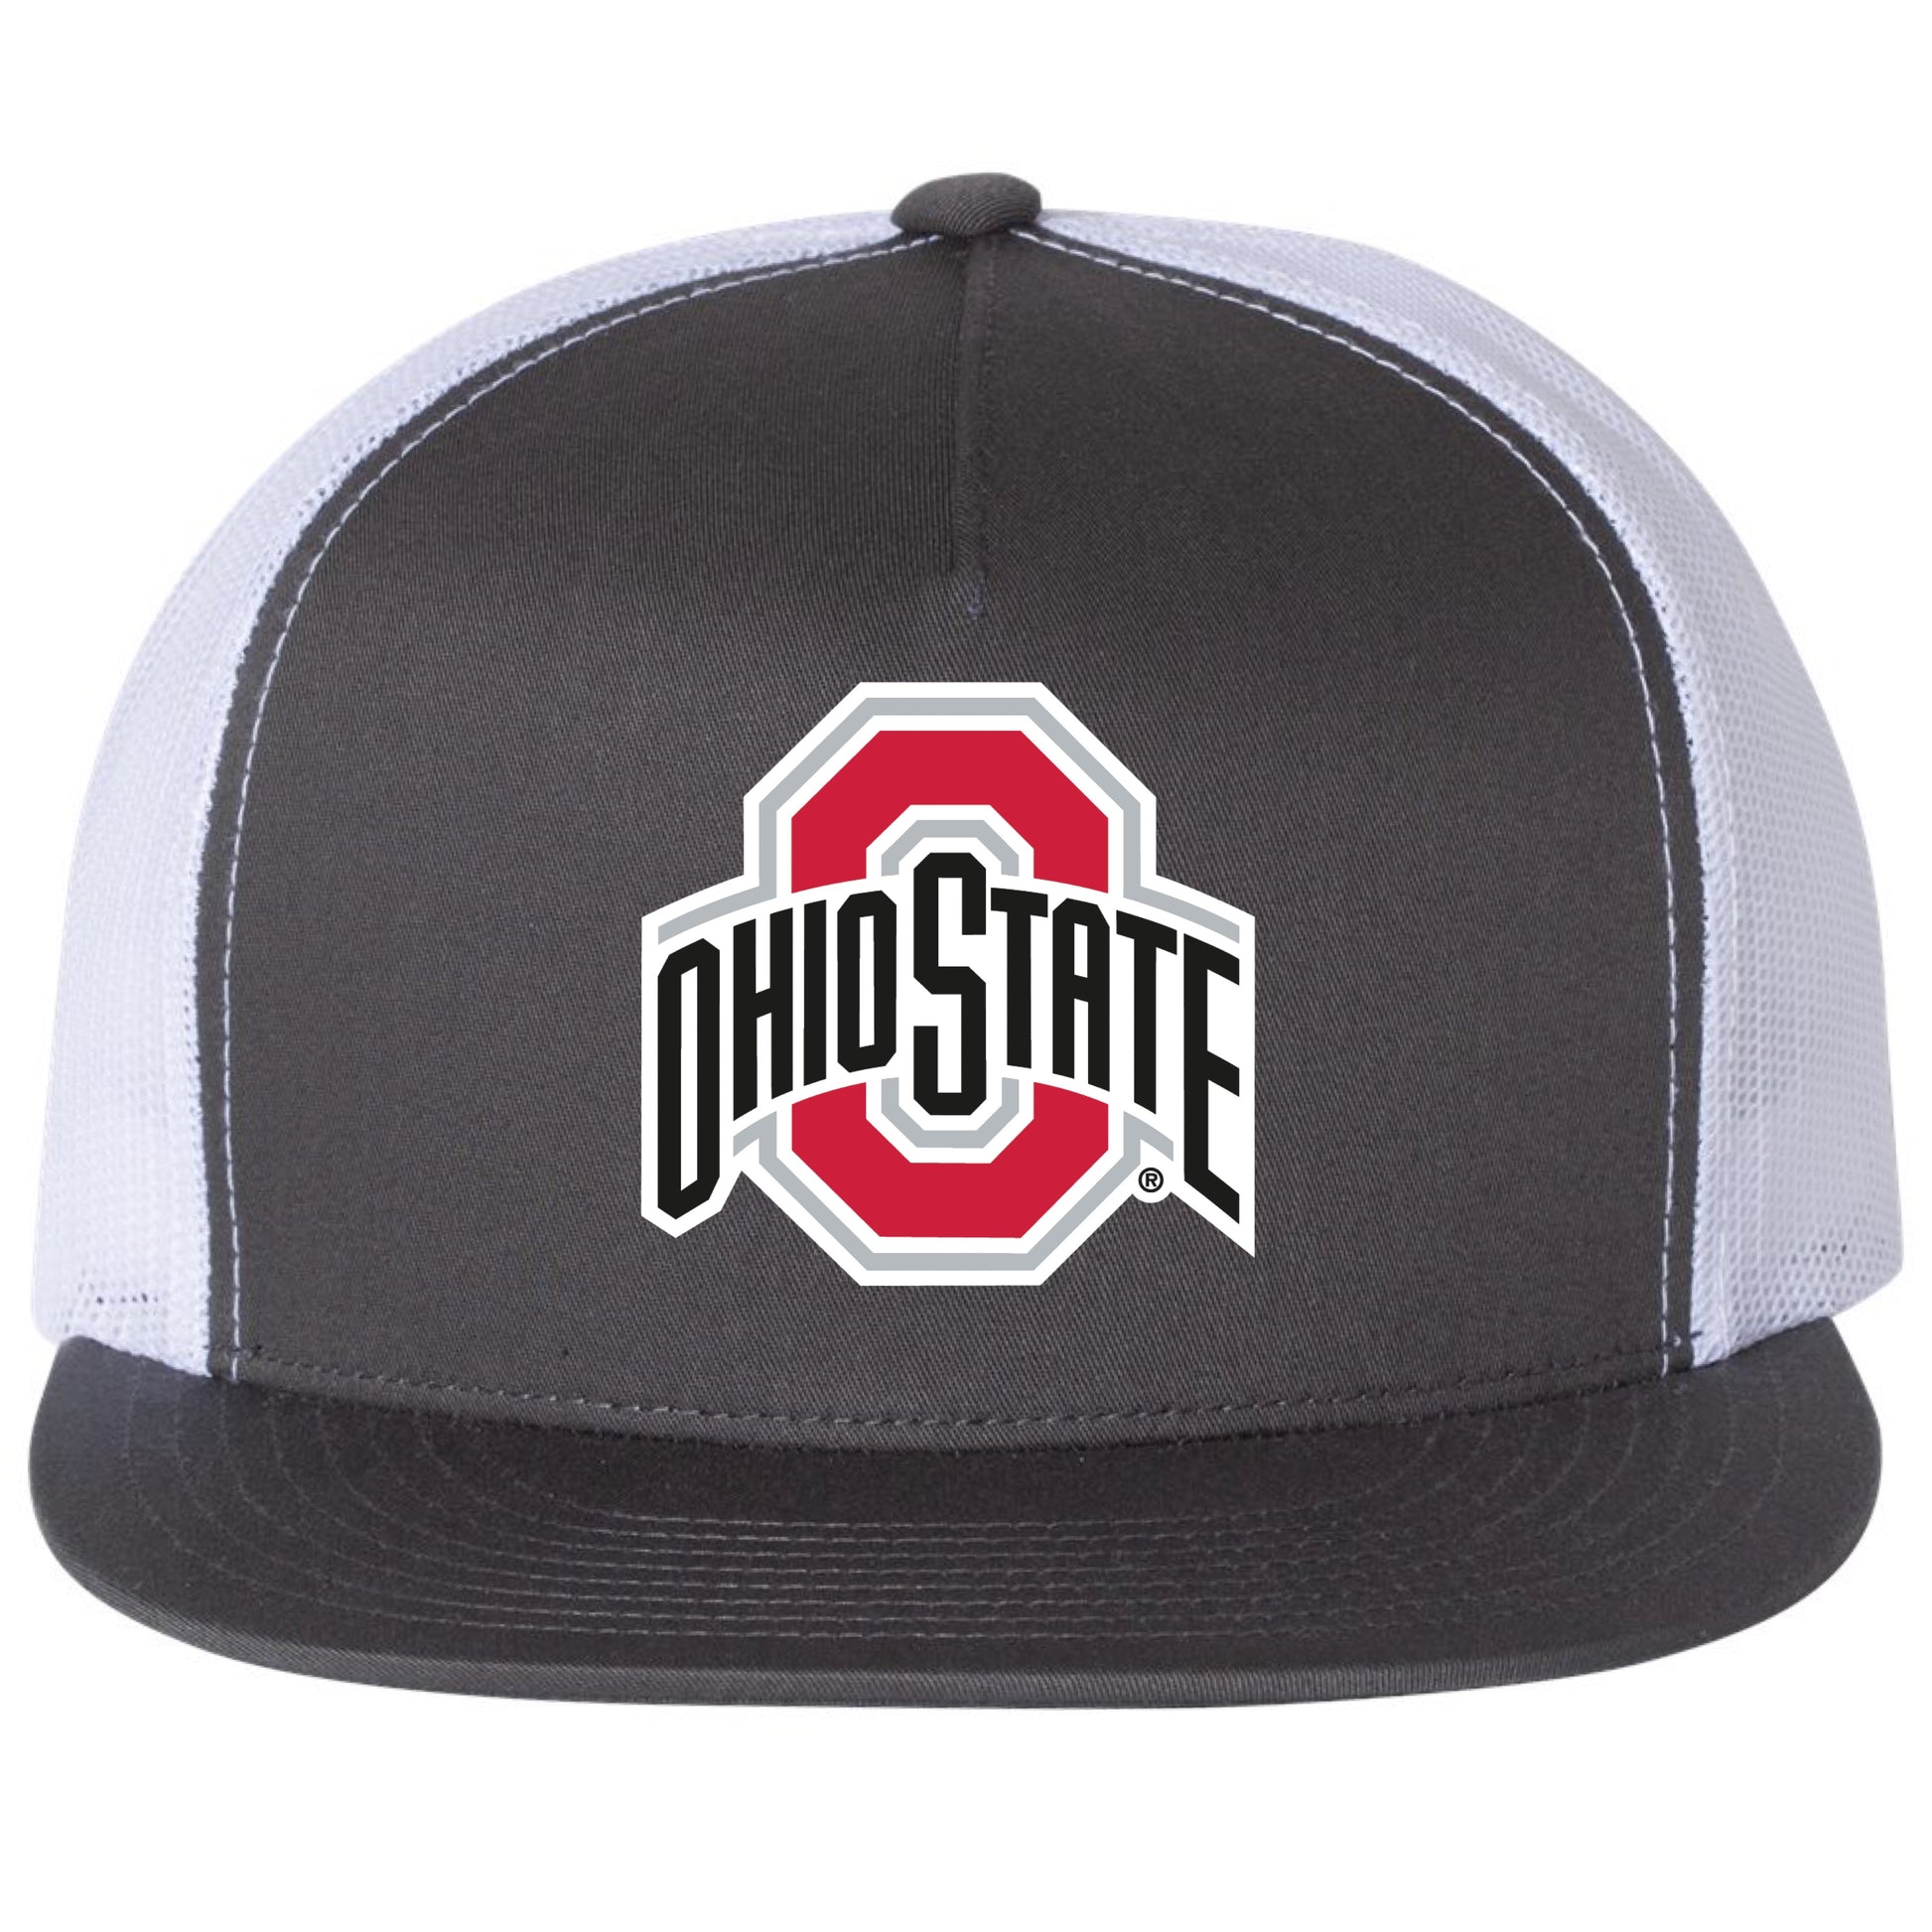 Ohio State Buckeyes 3D YP Snapback Flat Bill Trucker Hat- Charcoal/ White - Ten Gallon Hat Co.